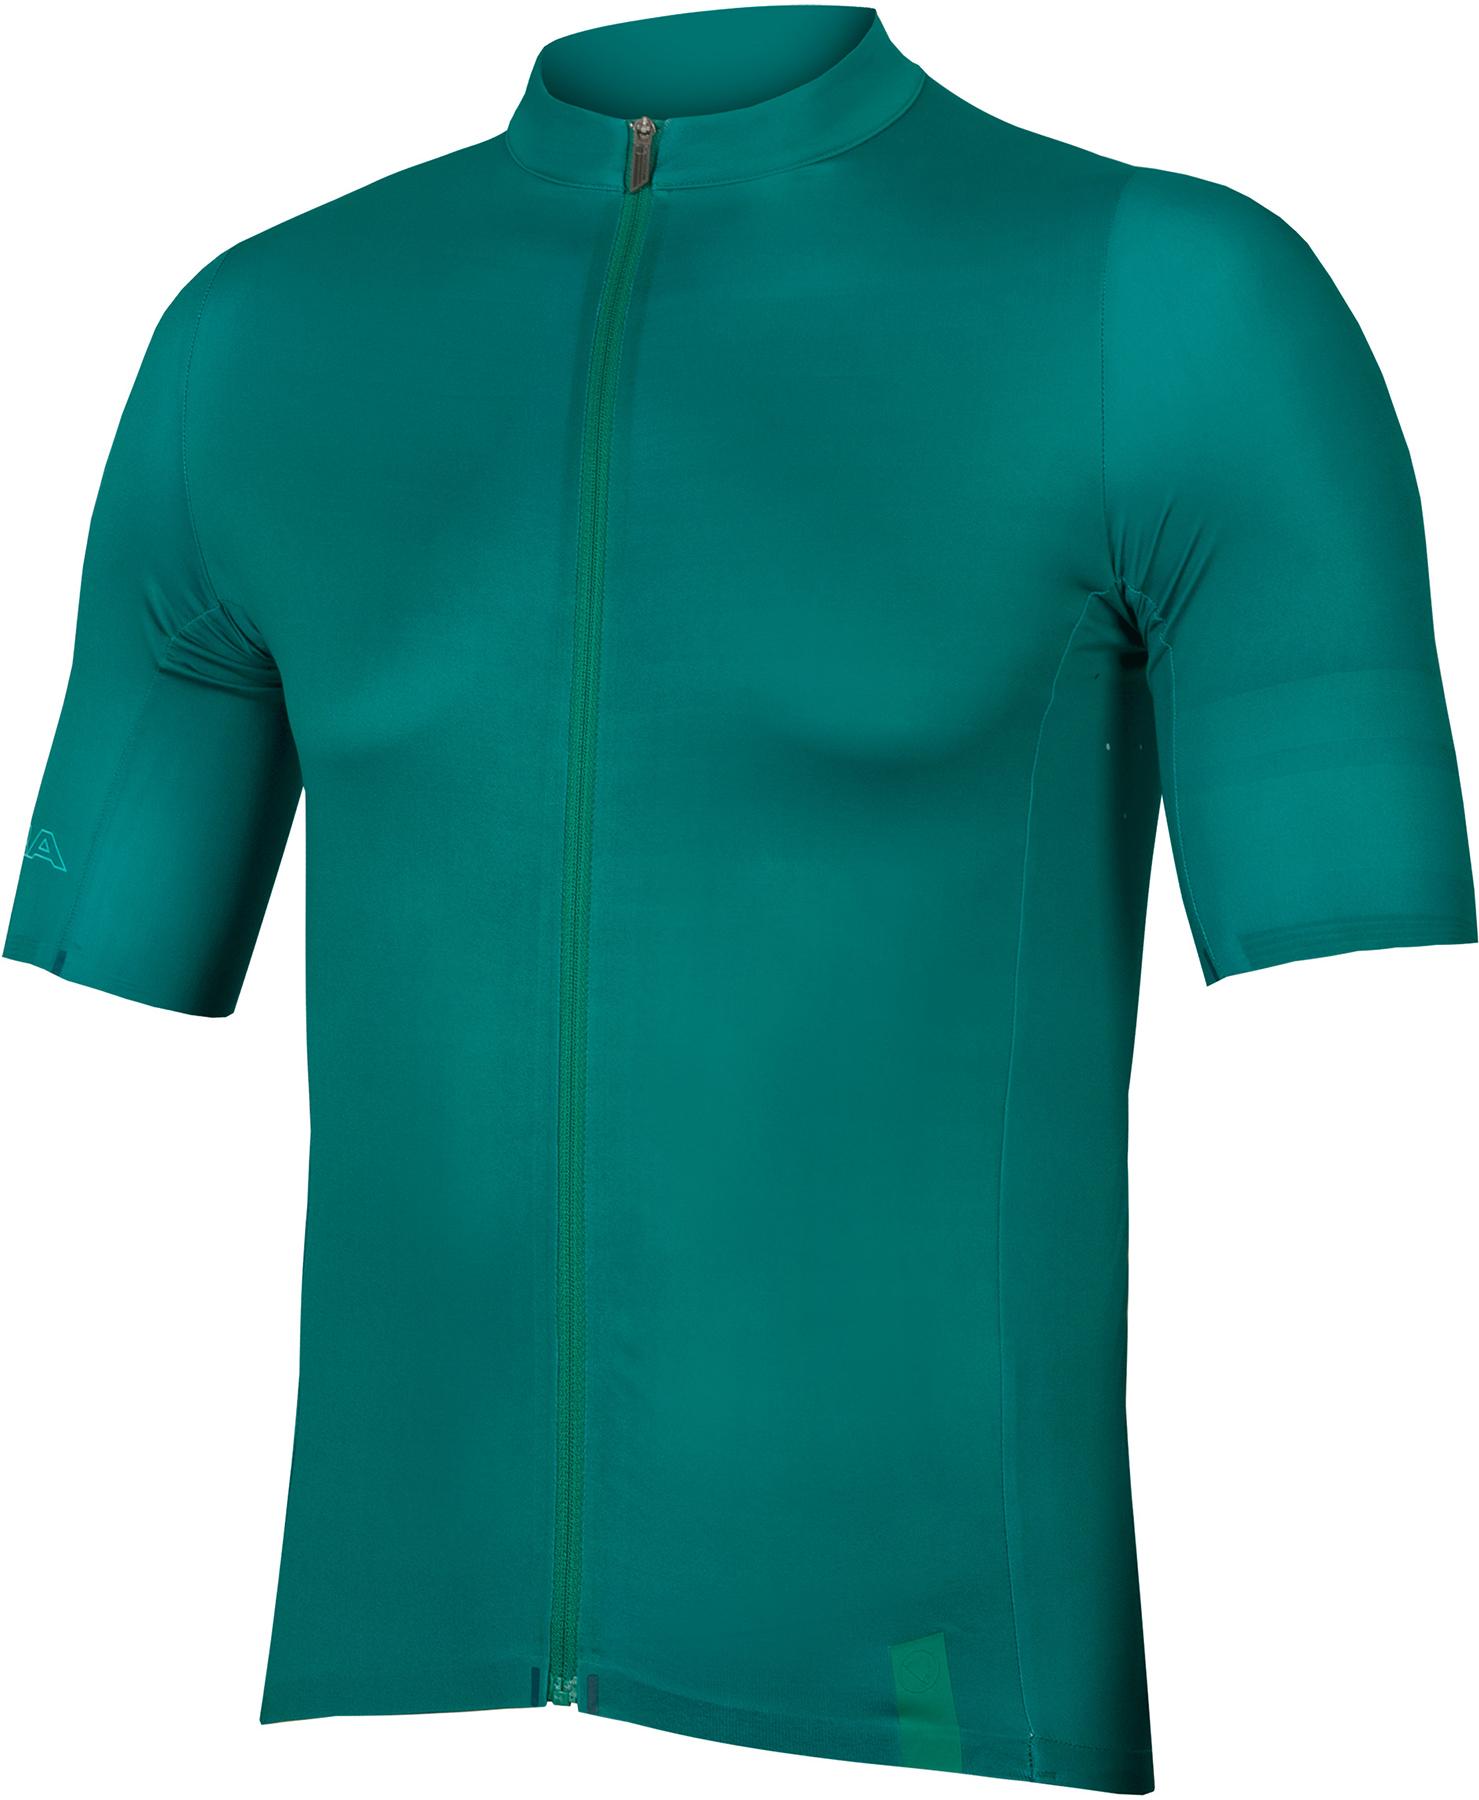 Endura Pro Sl Short Sleeve Cycling Jersey - Emerald Green